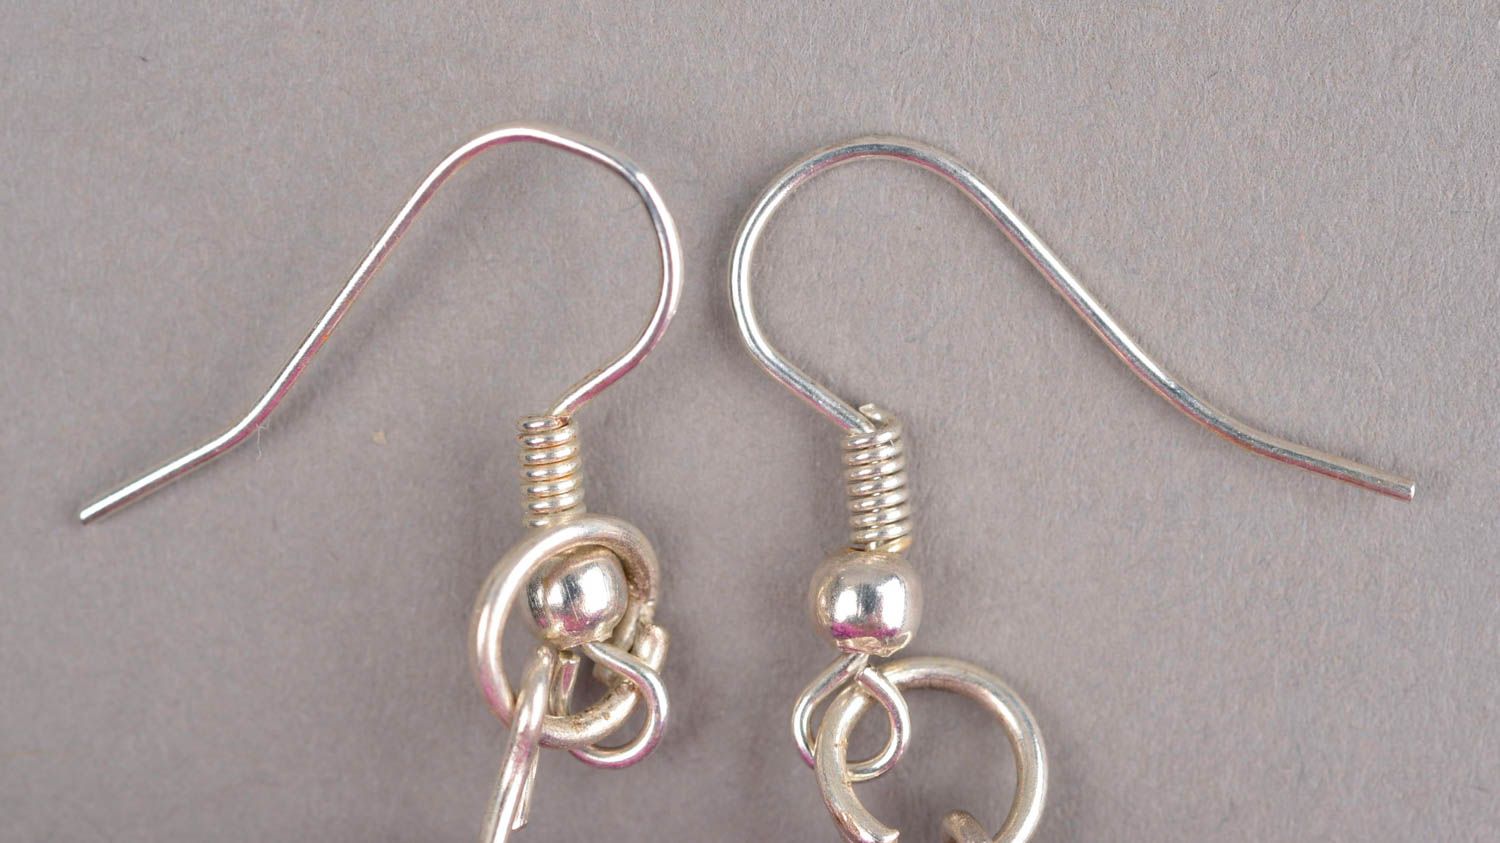 Small handmade plastic earrings artisan jewelry designs polymer clay ideas photo 4